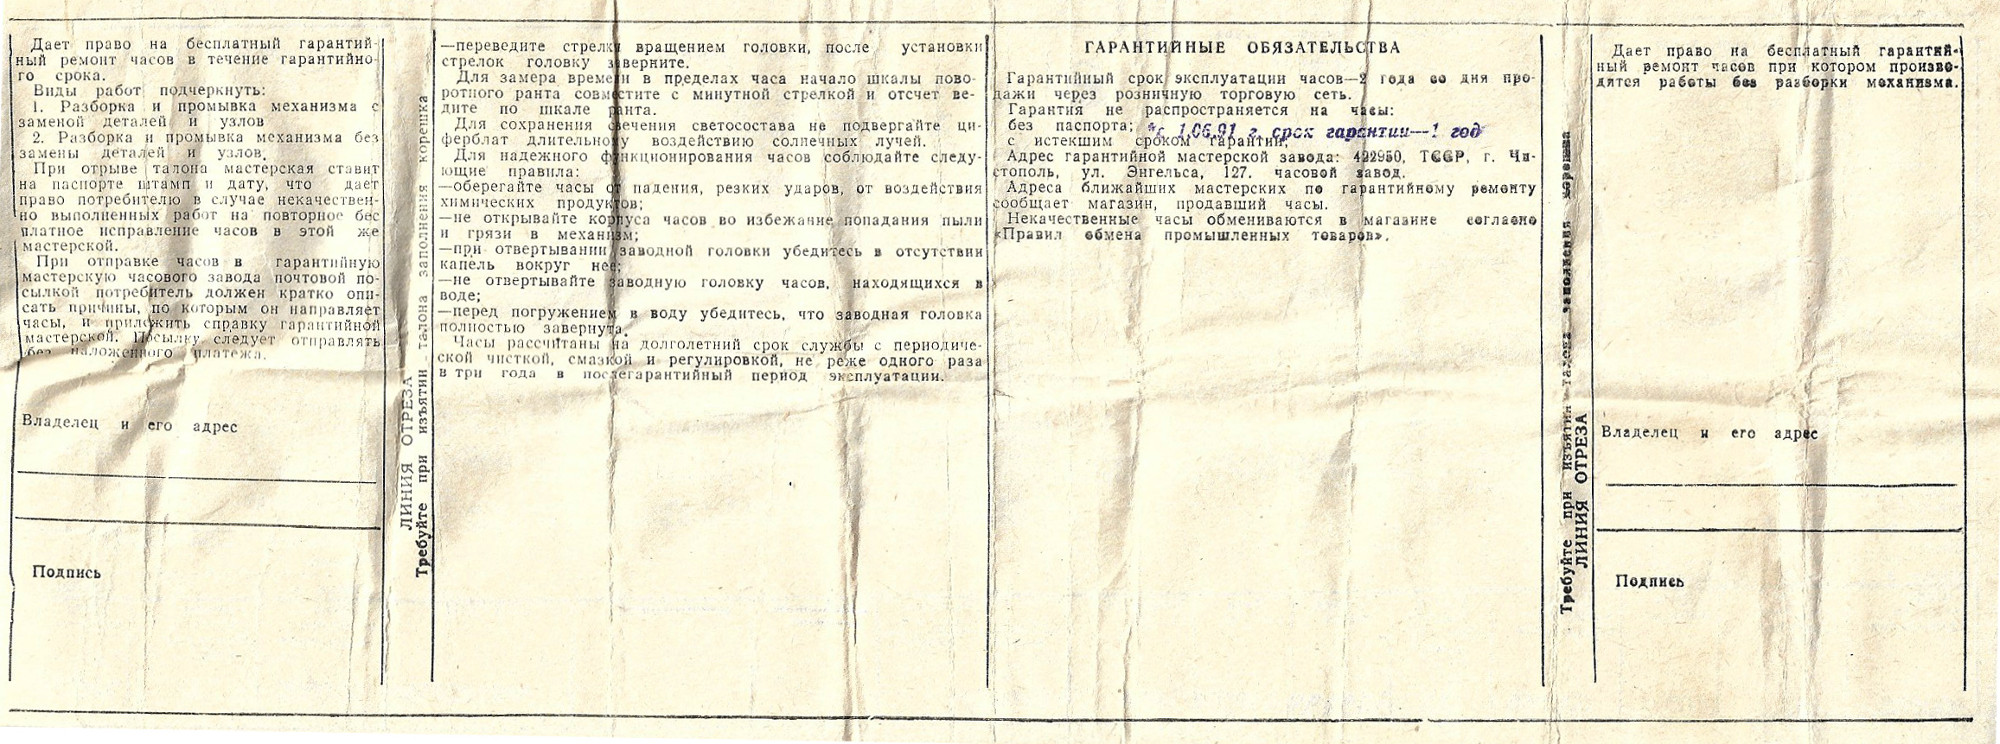 Vostok Amphibia Verde TCCP 8 passport